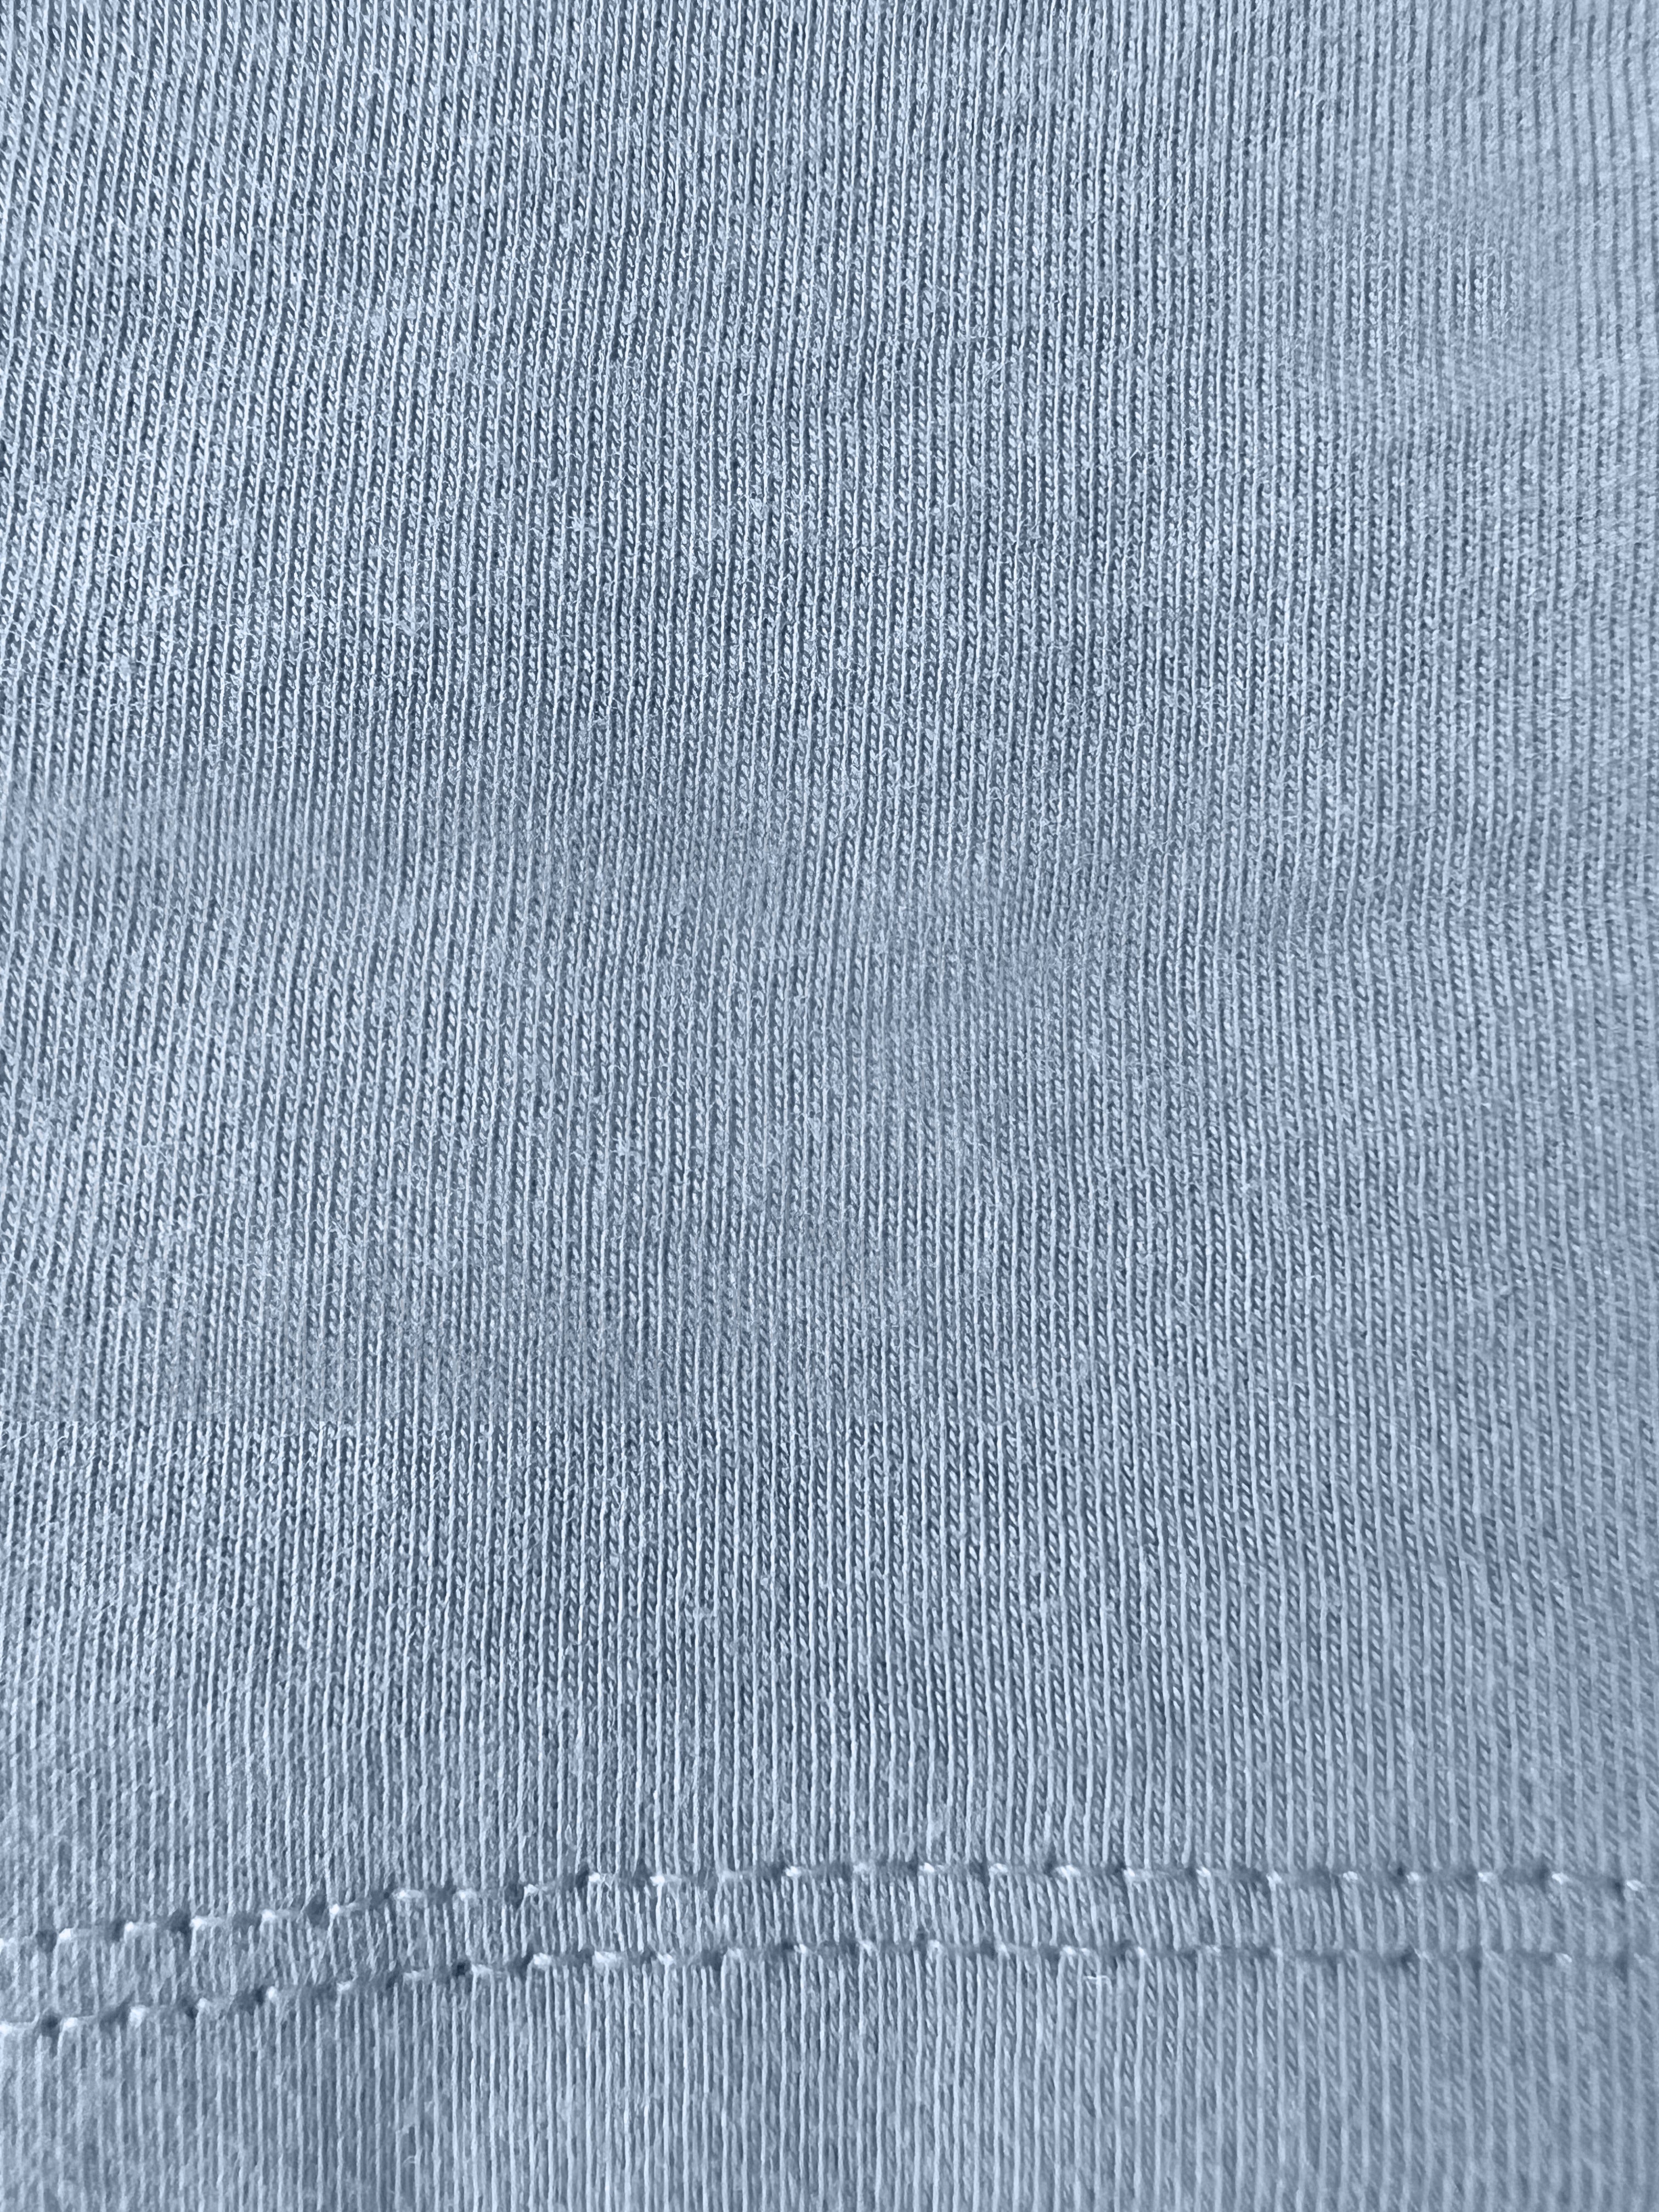 Crew Neck stone Denim plain T-shirt made with high quality cotton